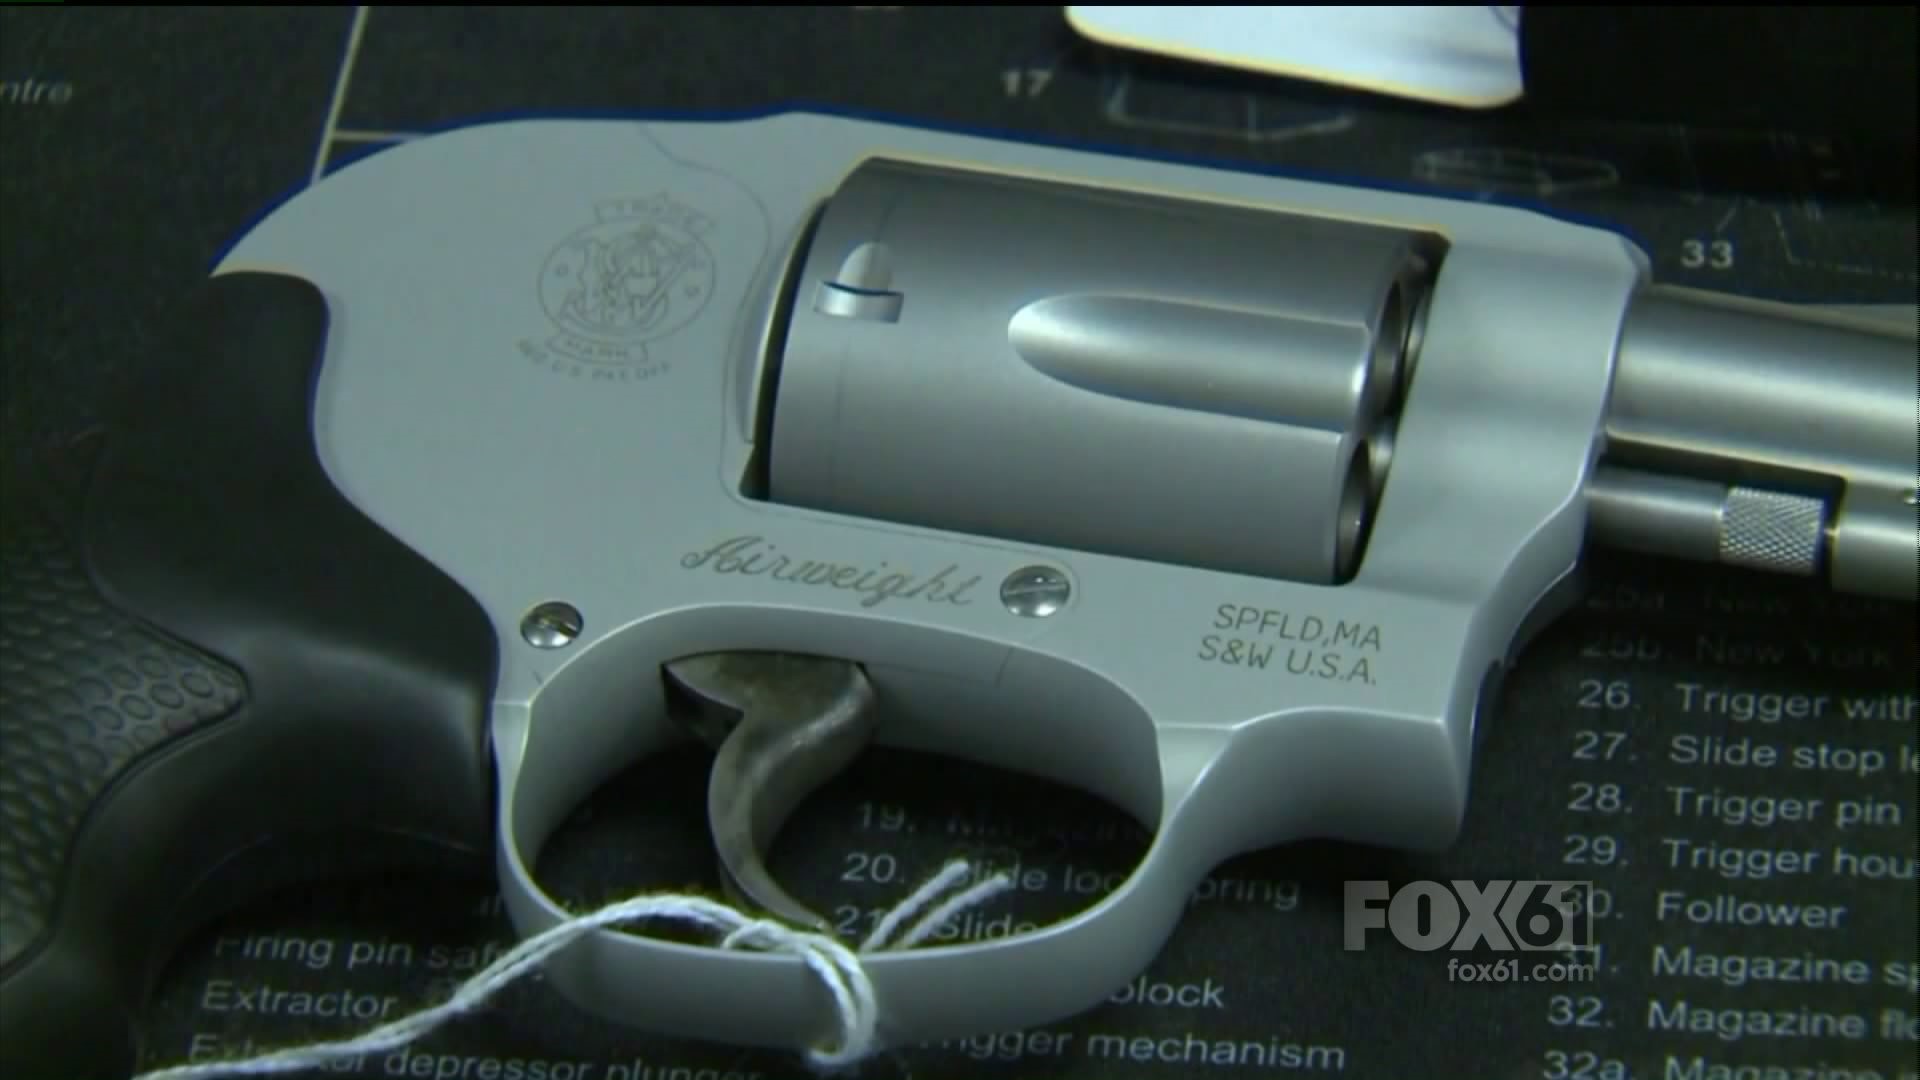 Gun legislation on the table in Connecticut